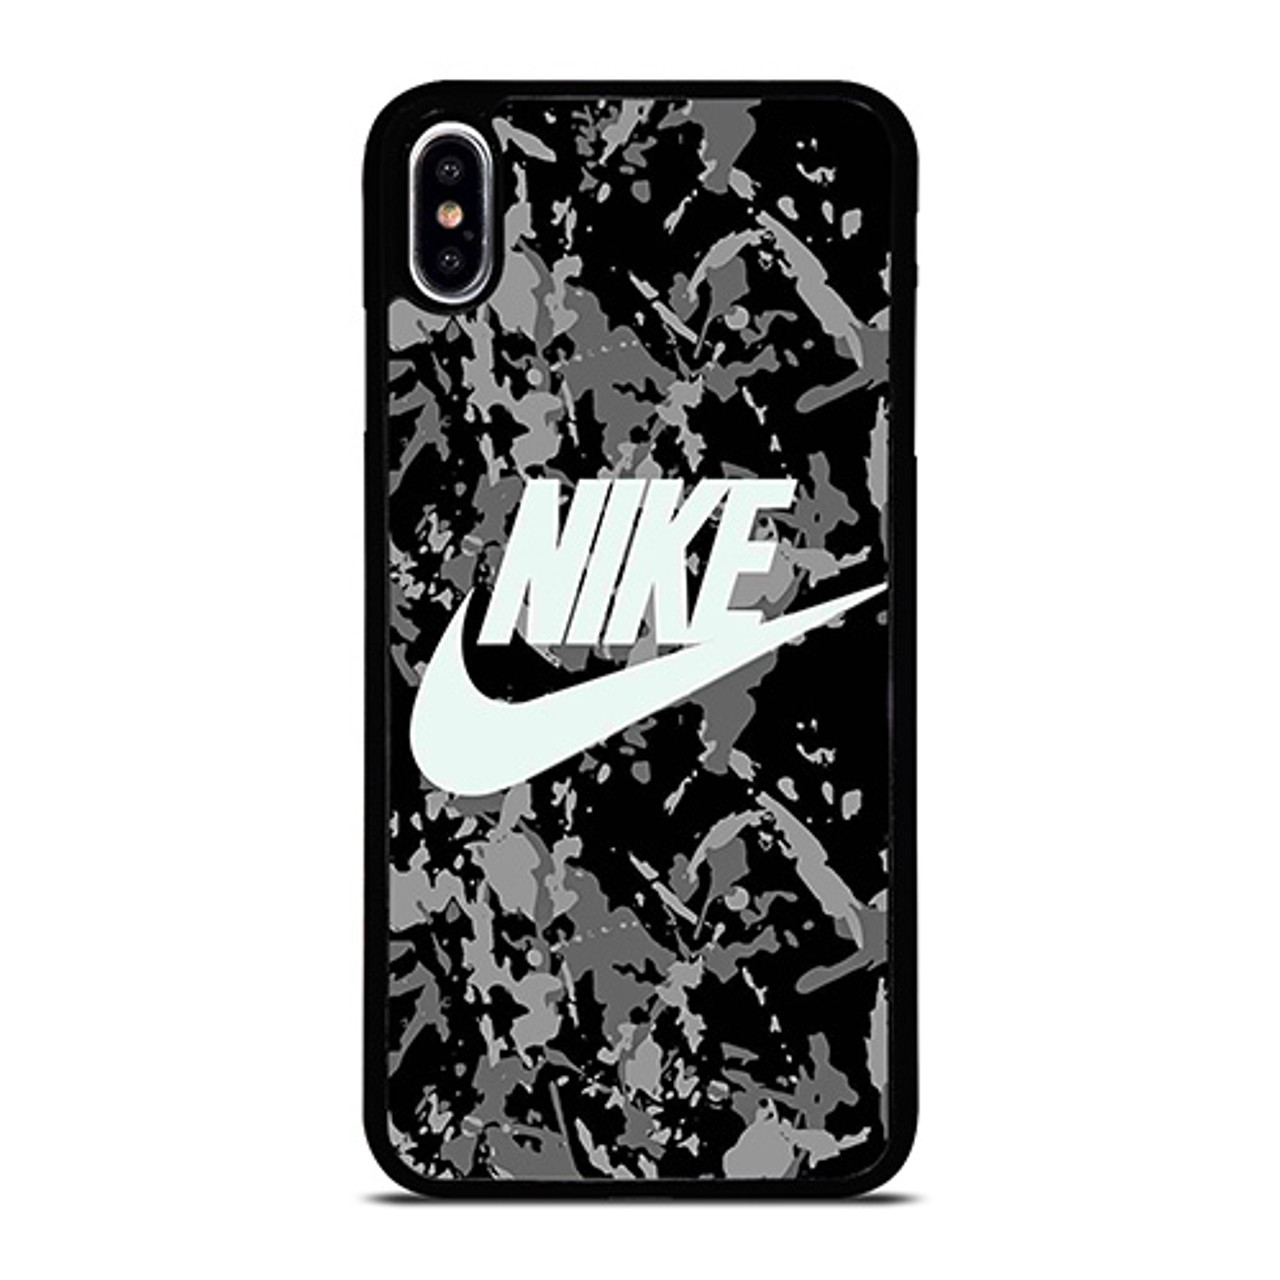 NIKE SPLASH LOGO iPhone Case Cover